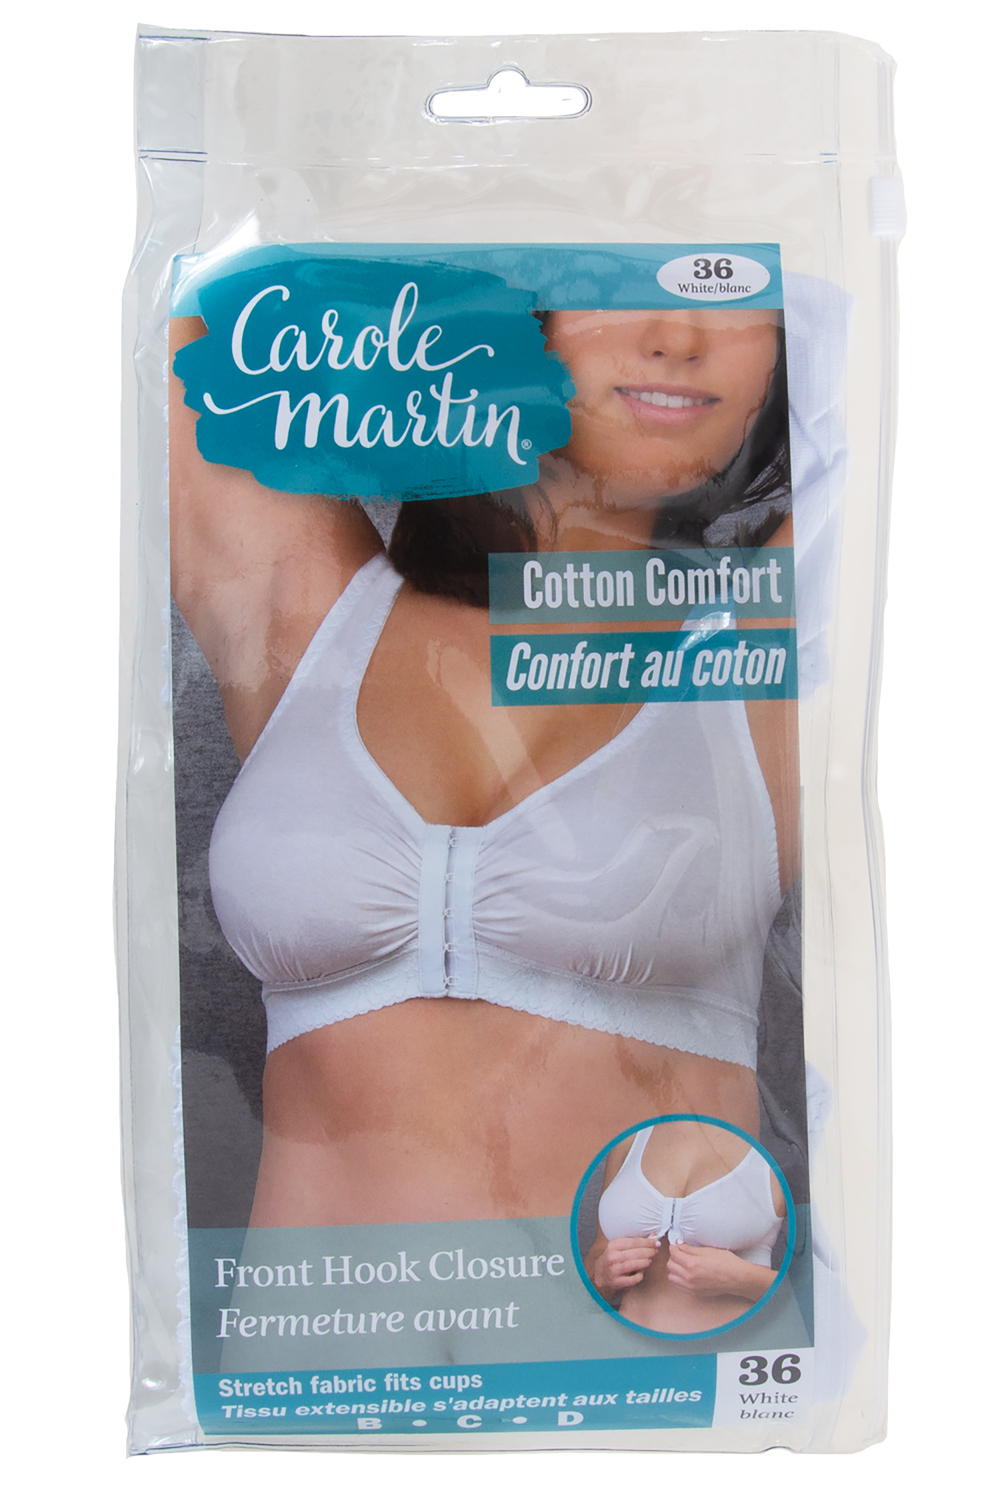 Full Freedom Comfort Bra, 1 unit, 36, White – Carole Martin : Underwear